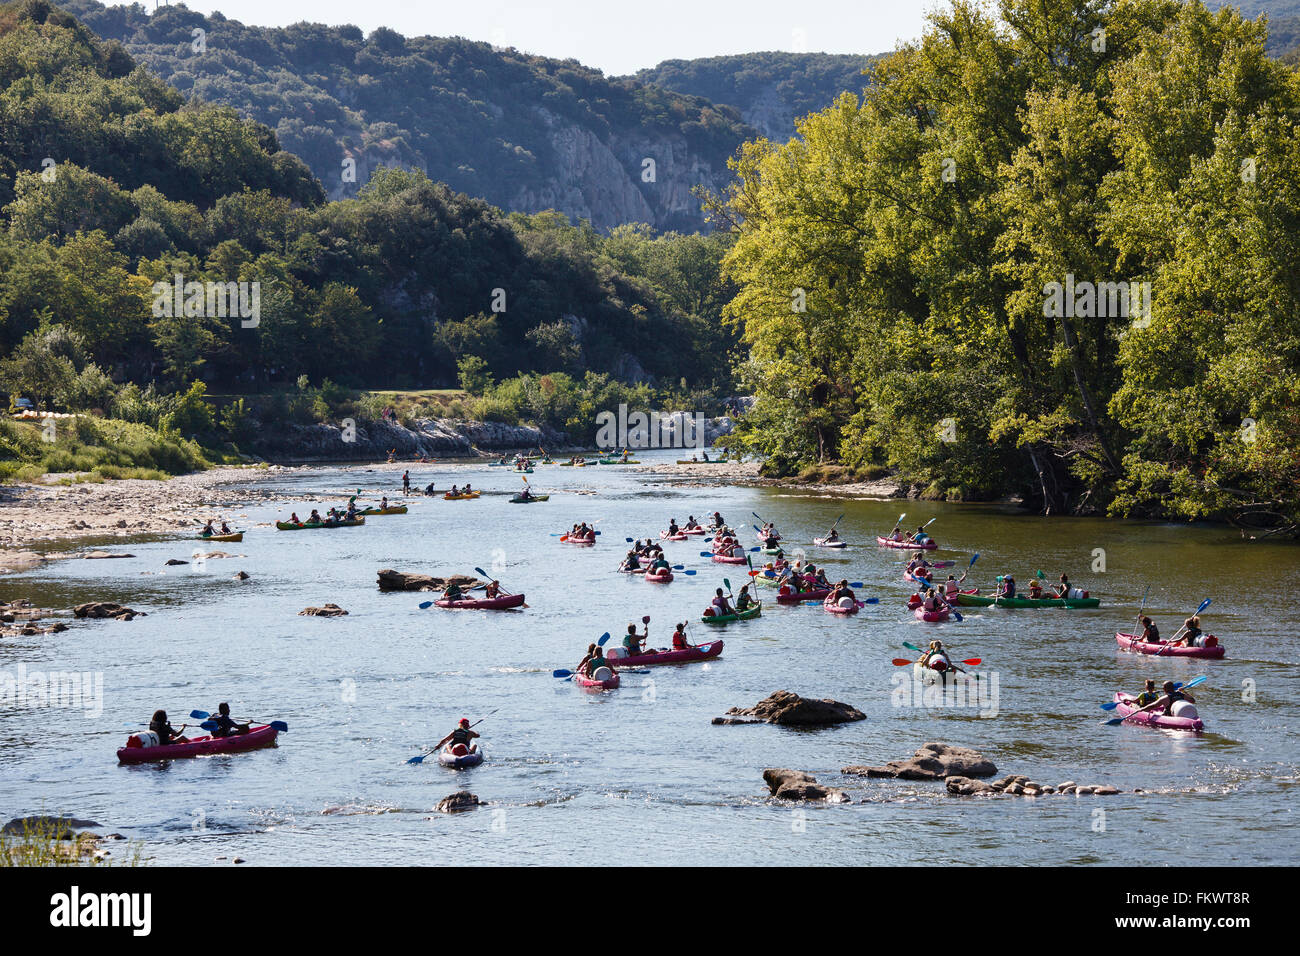 Canoeists on the River Ardèche, Vallon-Pont-d'Arc, Ardèche, France Stock Photo